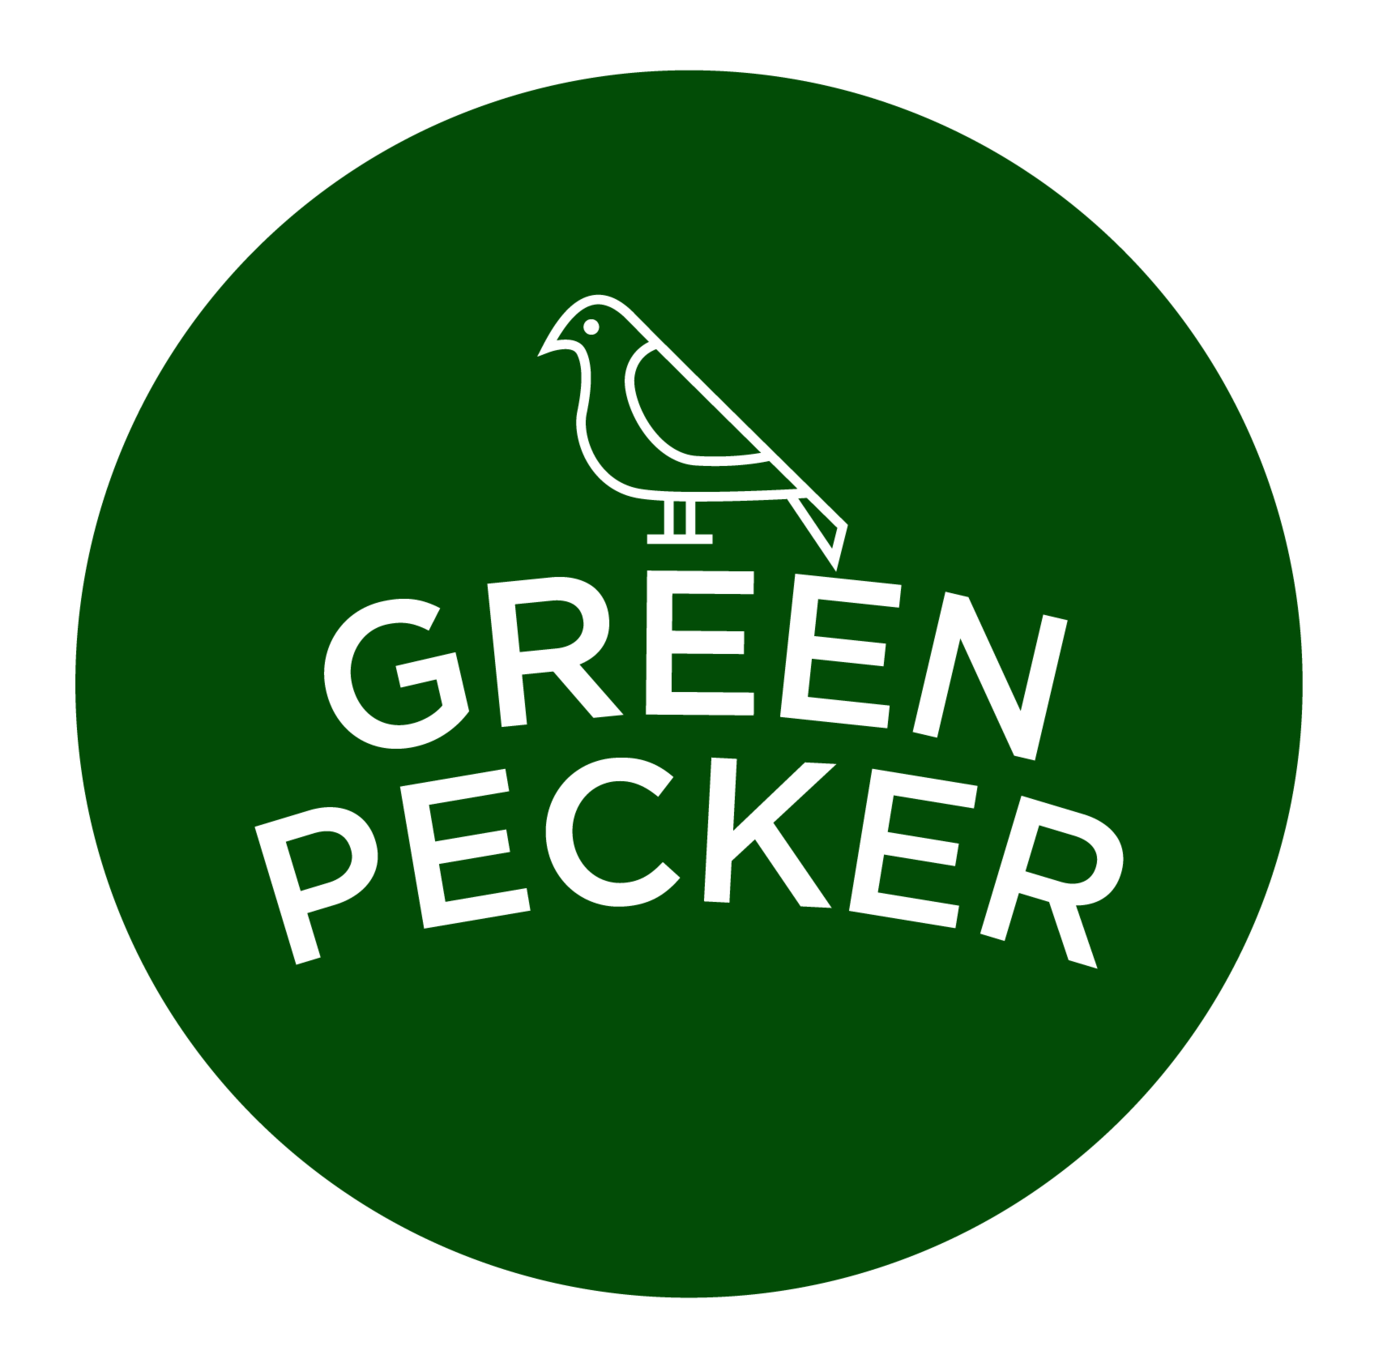 Green pecker logo